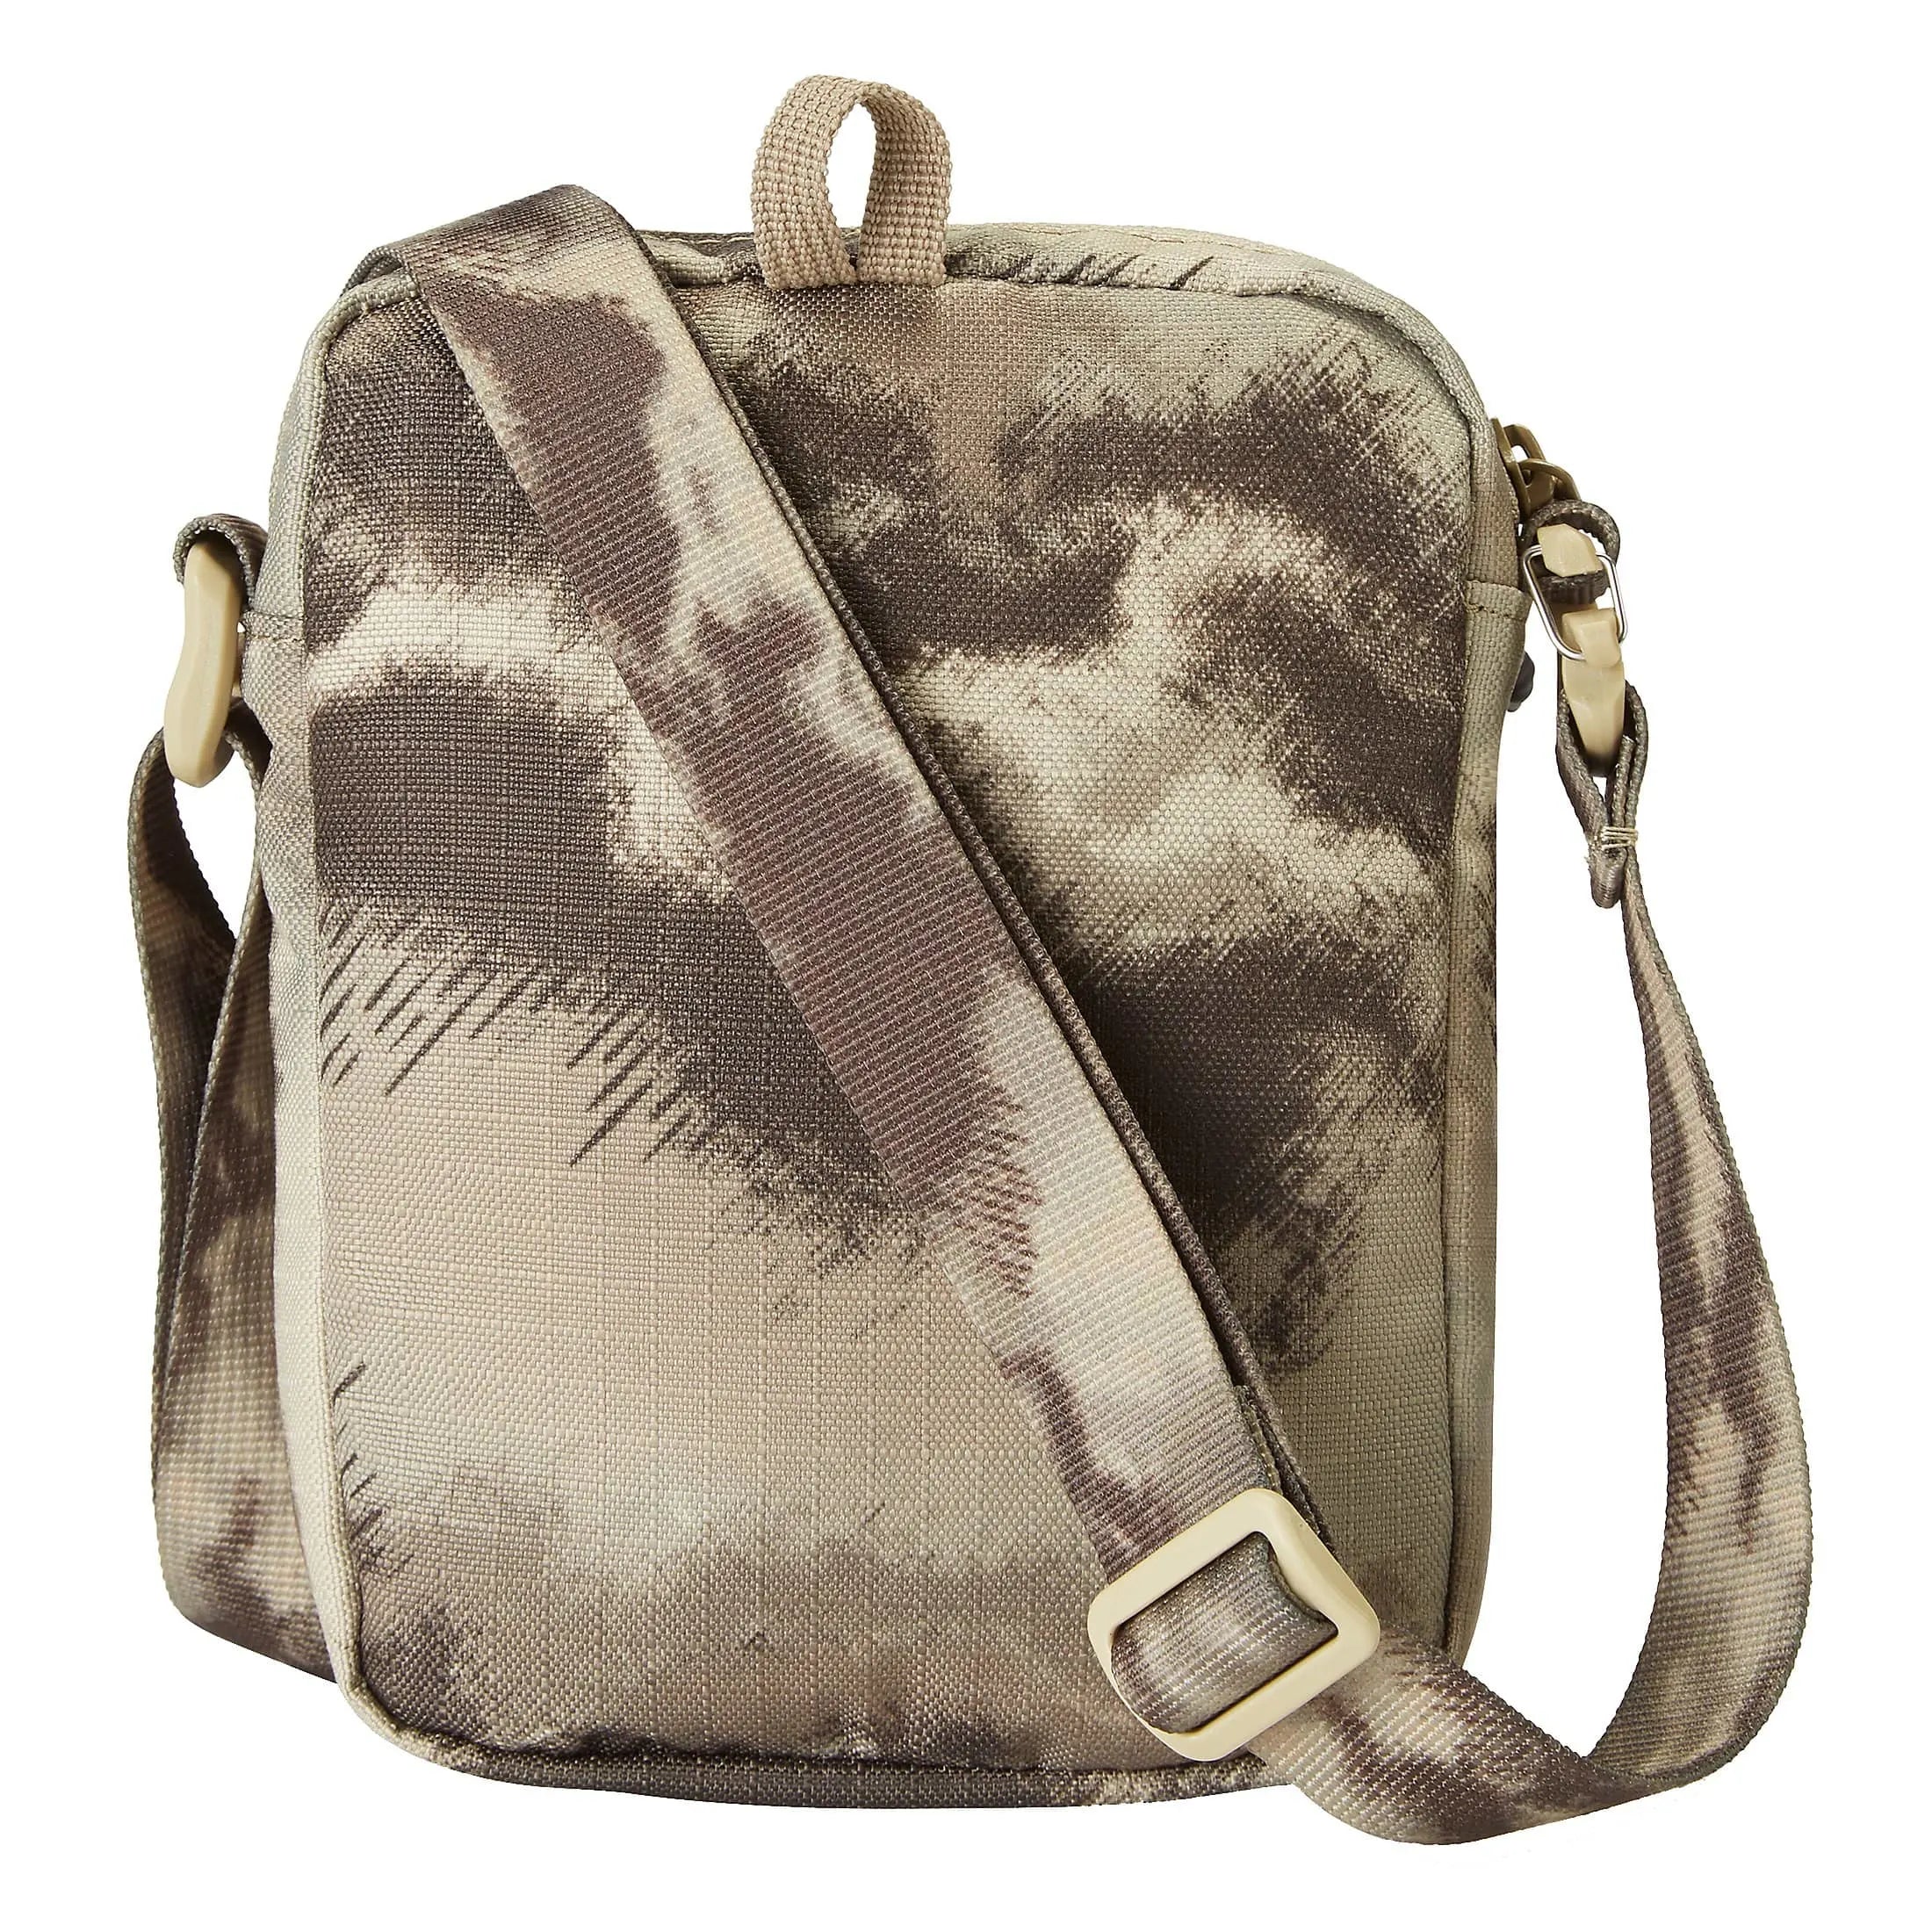 Dakine Packs & Bags Field Bag Handtasche 18 cm - ashcroft camo